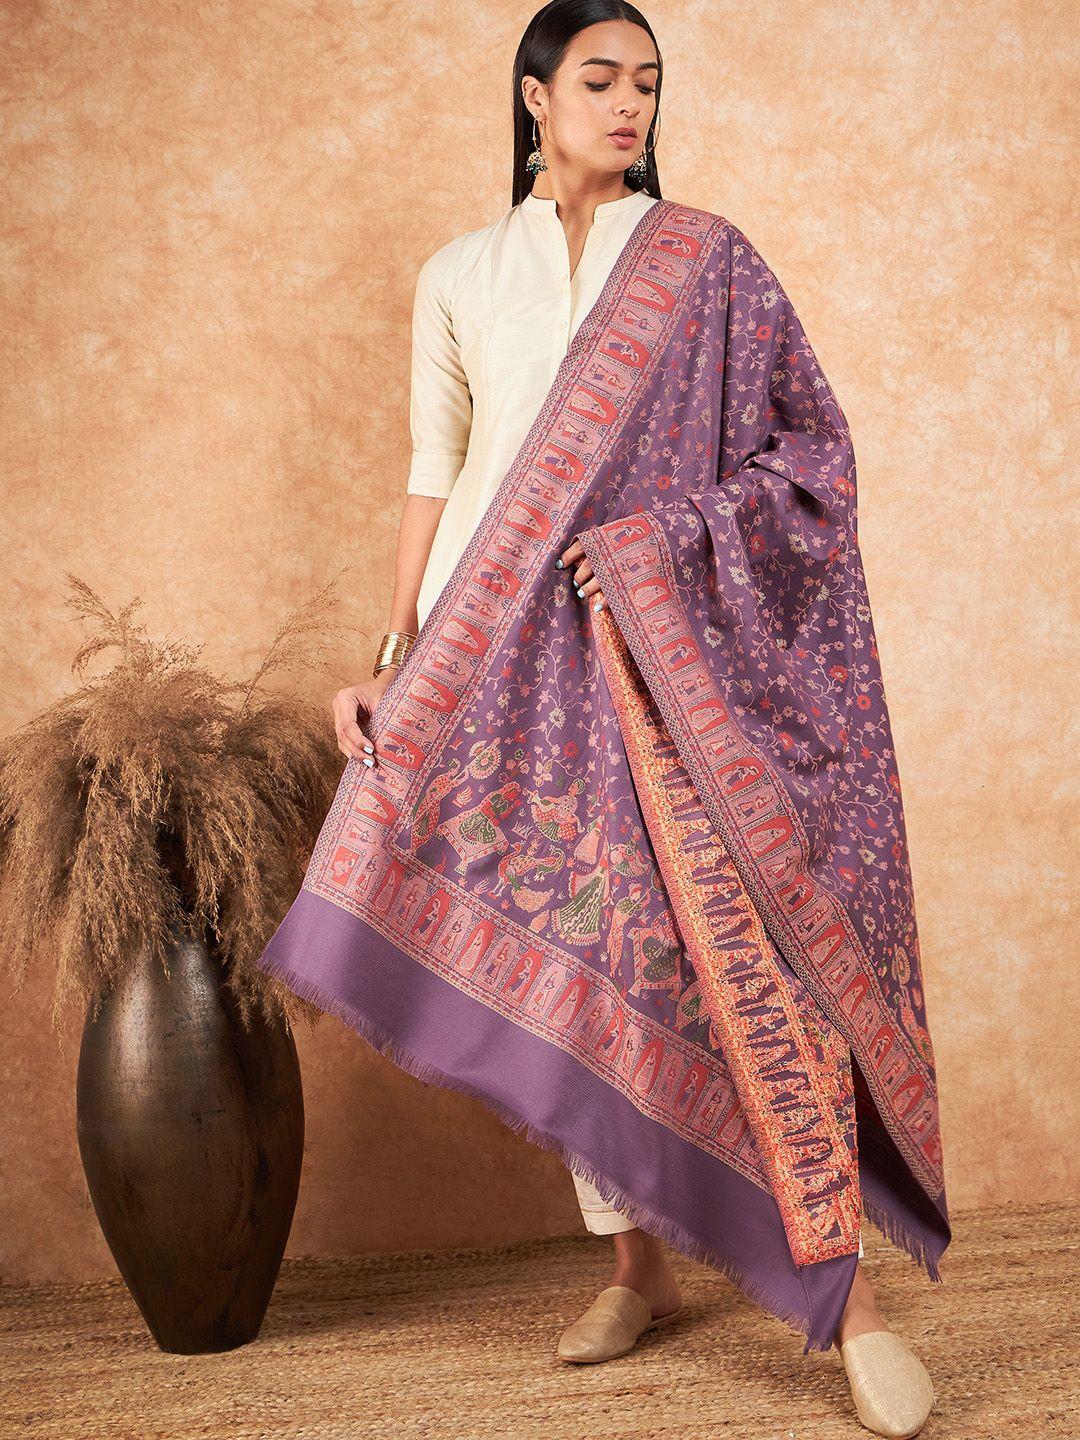 hk colours of fashion ethnic motifs woven design woollen shawl